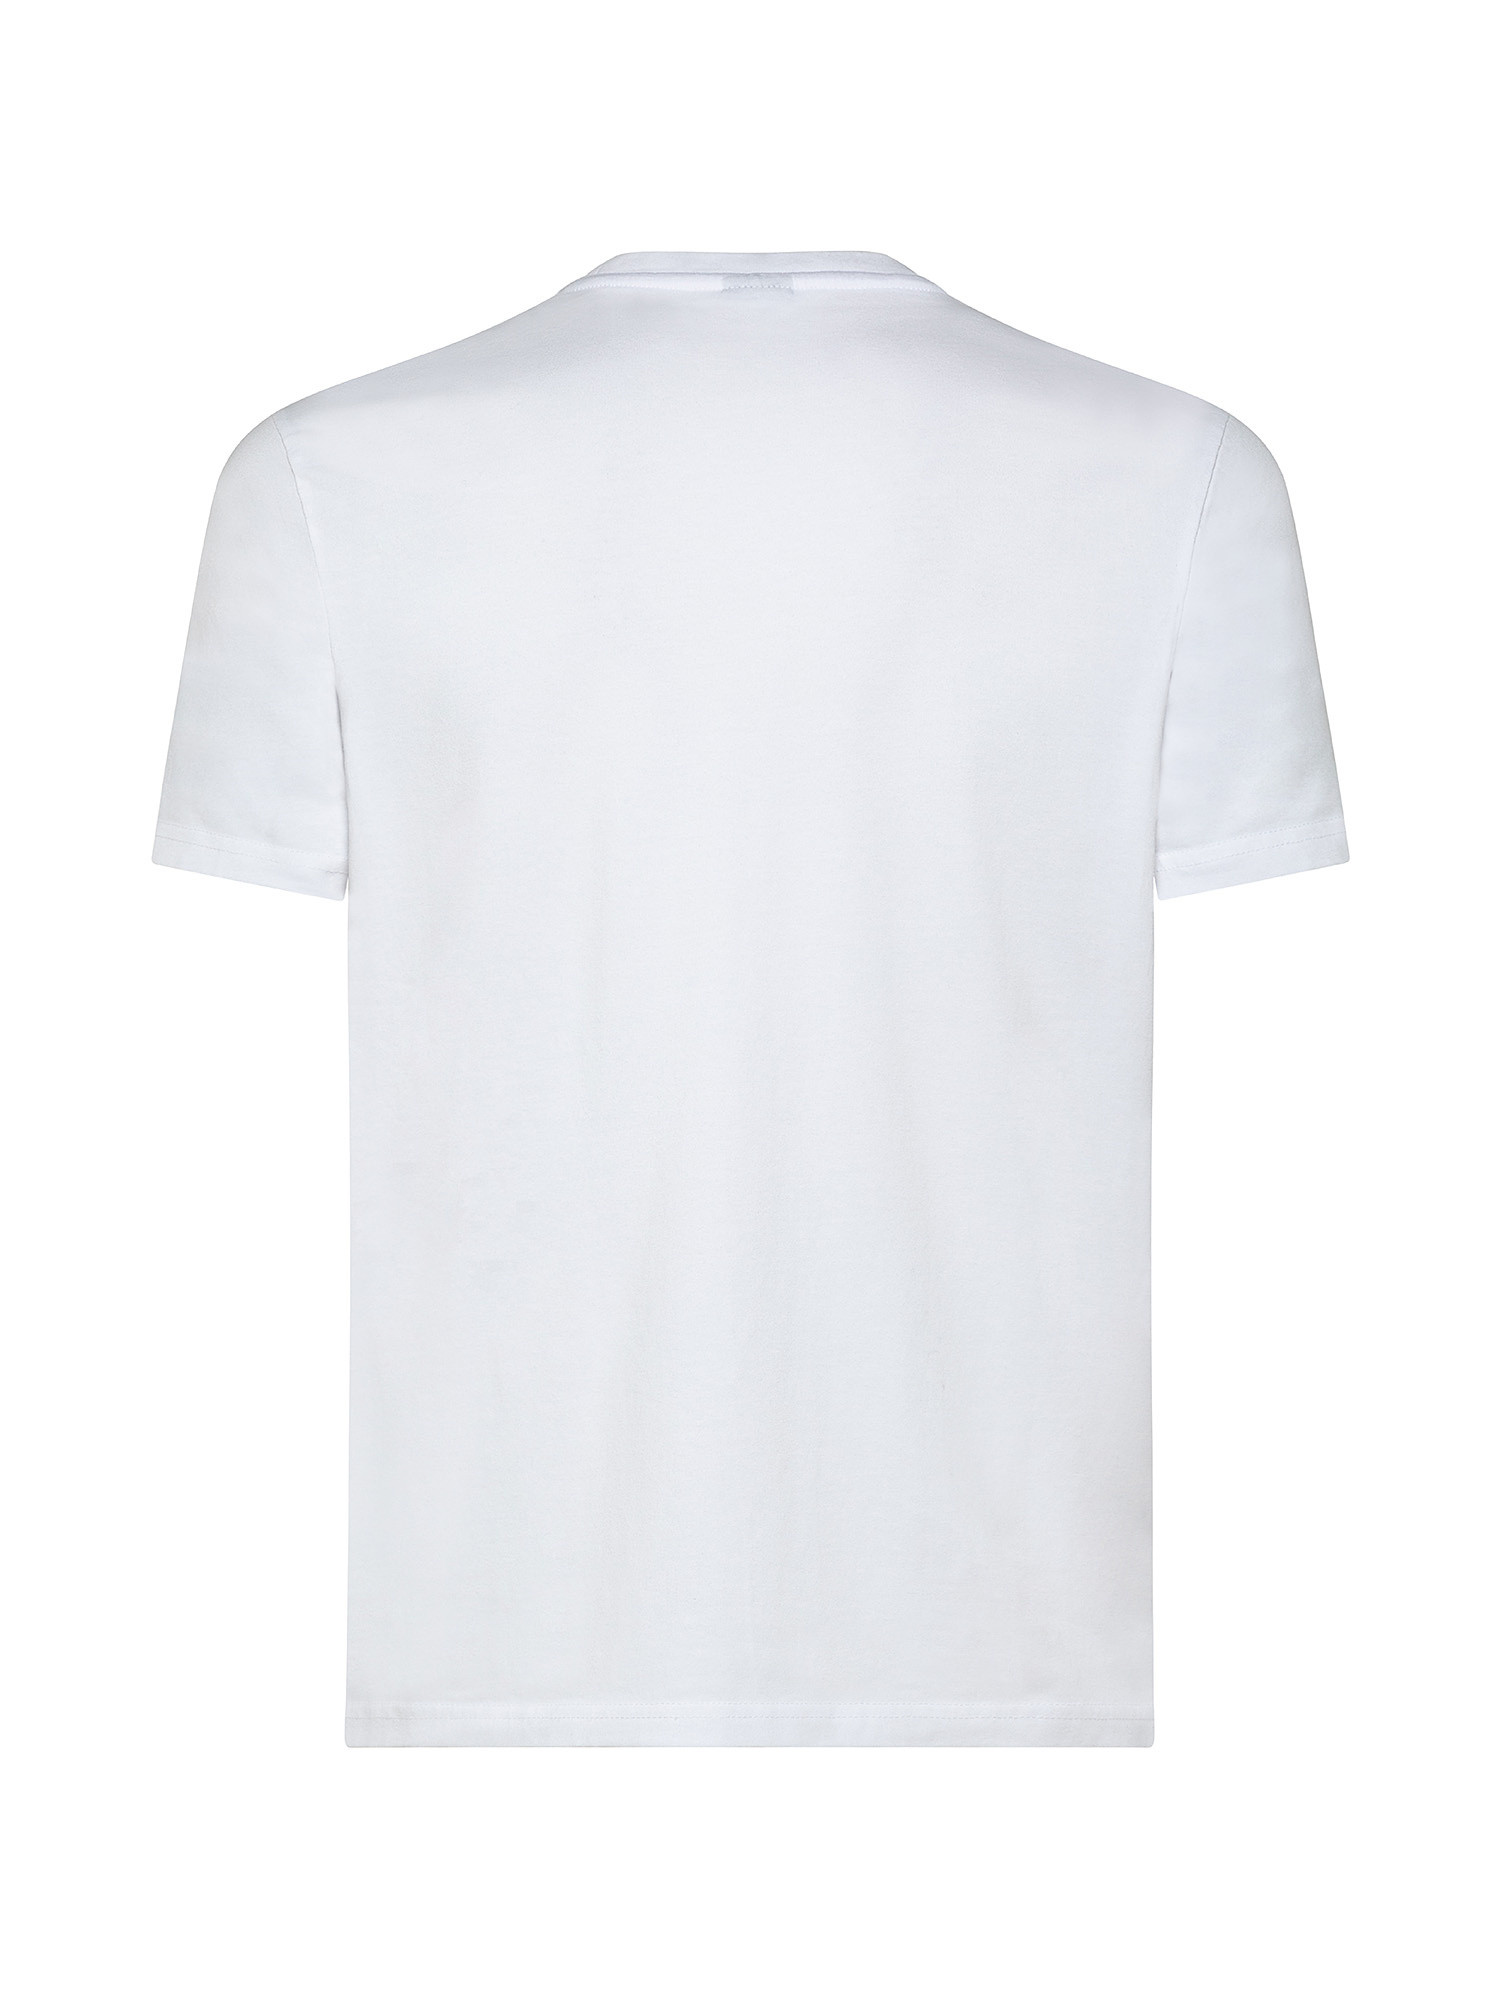 T-shirt manica corta con logo, Bianco, large image number 1